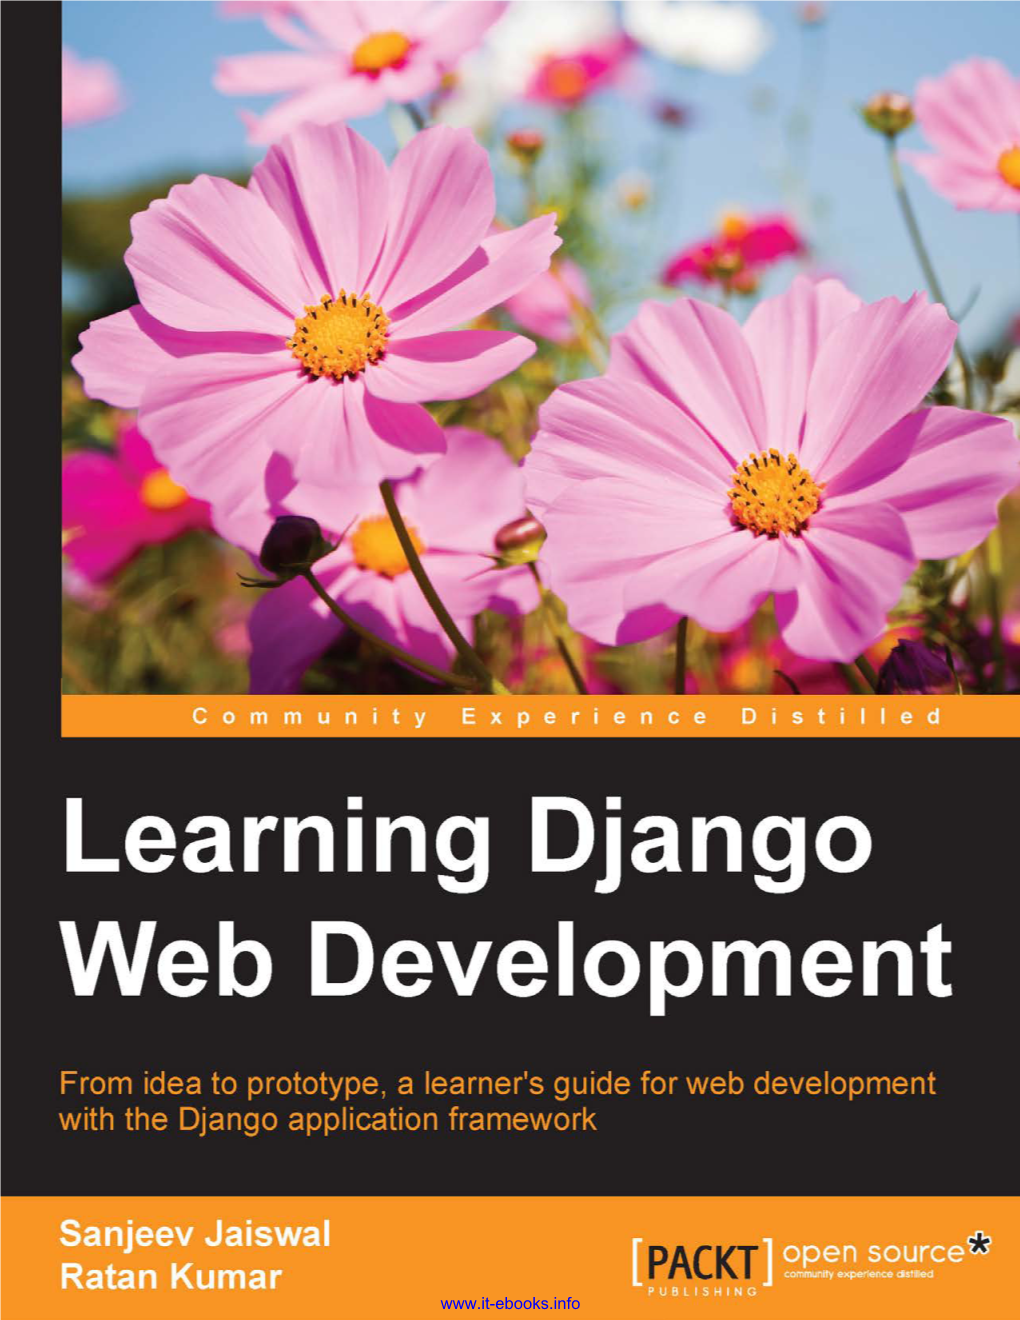 Learning Django Web Development